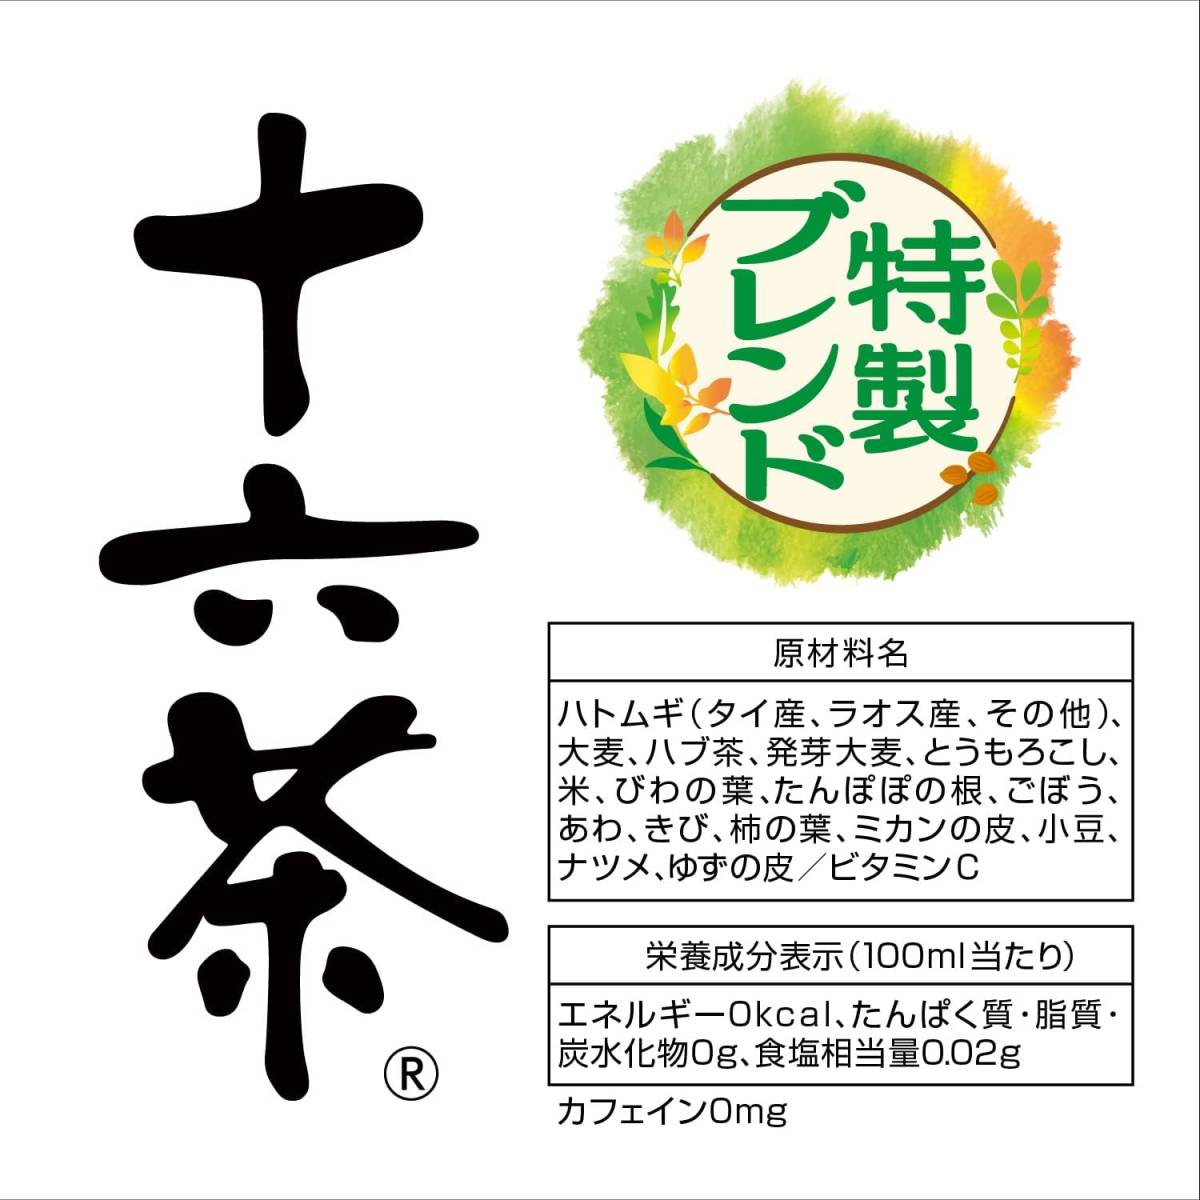 630 мм литров (x 24) Asahi напиток Asahi 10 шесть чай 630ml×24шт.@[ чай ] [ non Cafe in ]